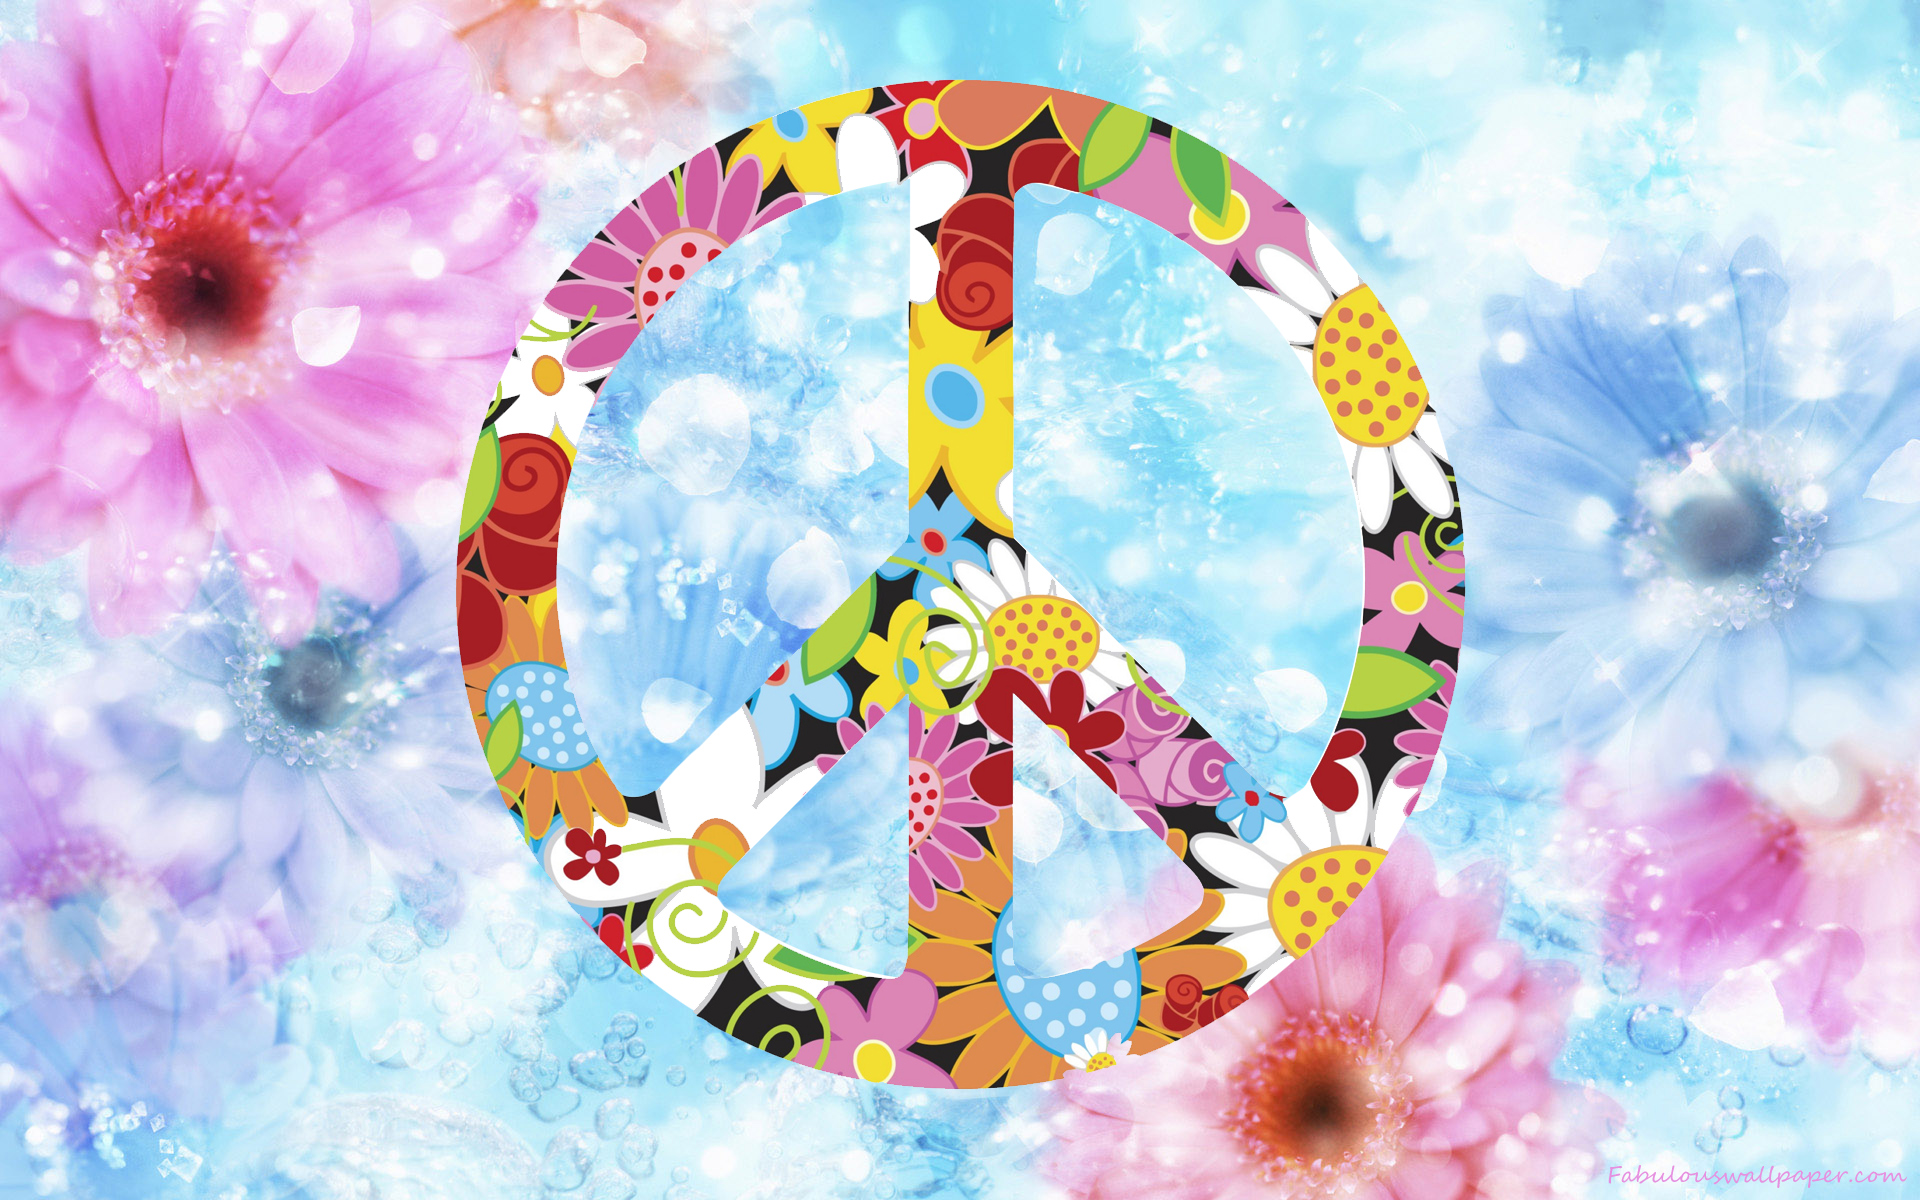 peace wallpaper hd,circle,graphic design,illustration,flower,pattern